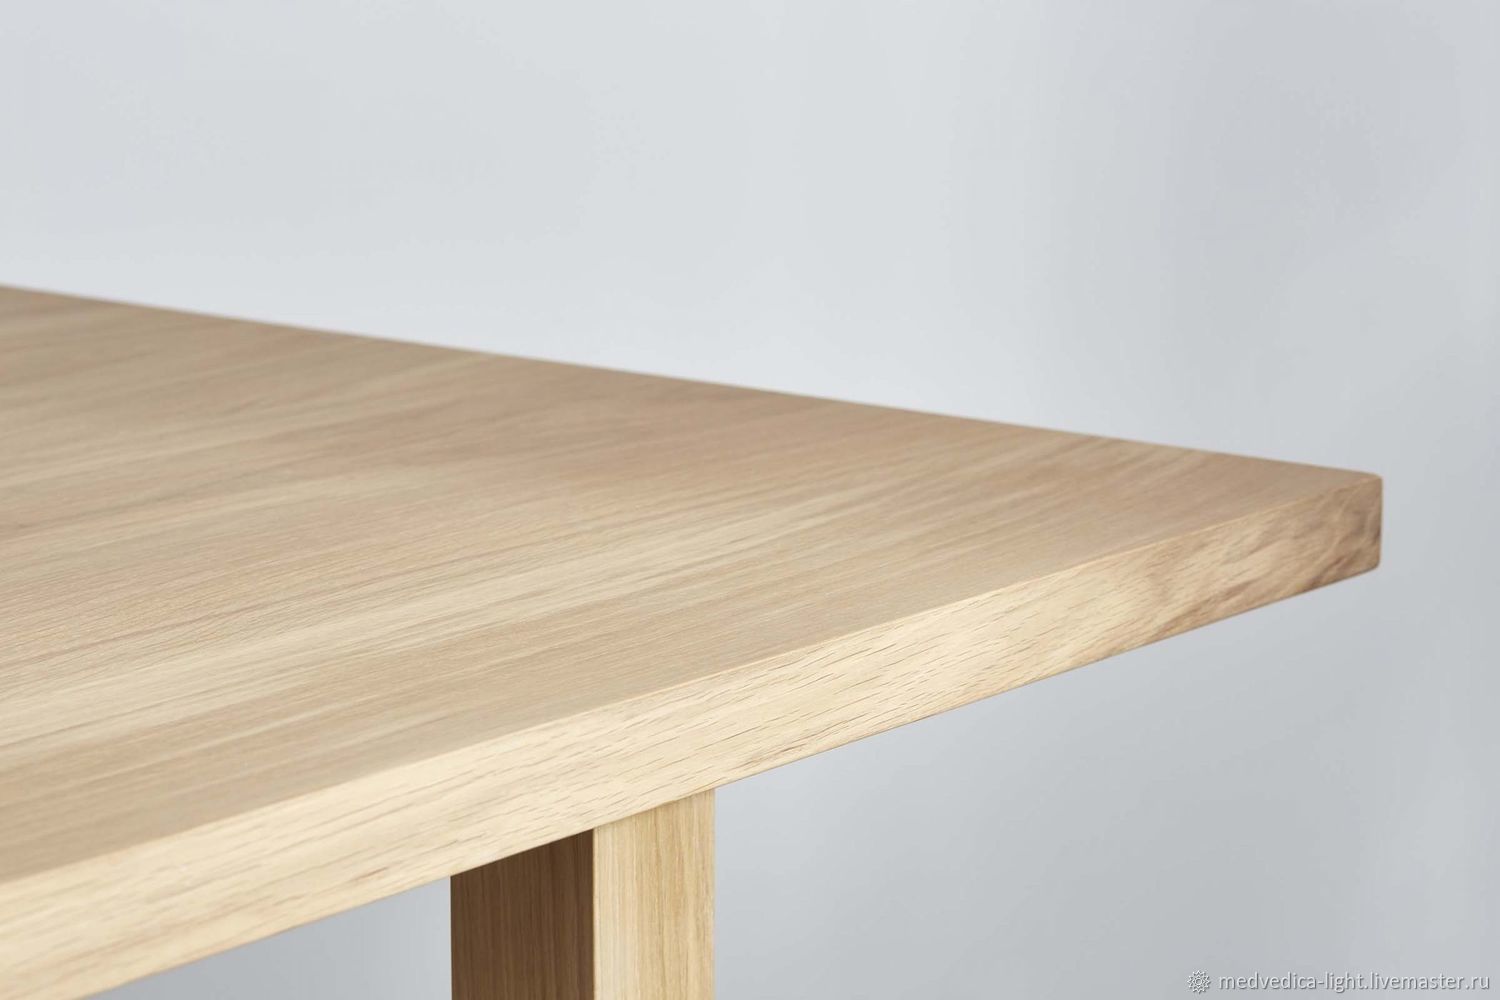 Край стола предложения. Край стола. Стол из светлого дерева. Край деревянного стола. Стол дуб.